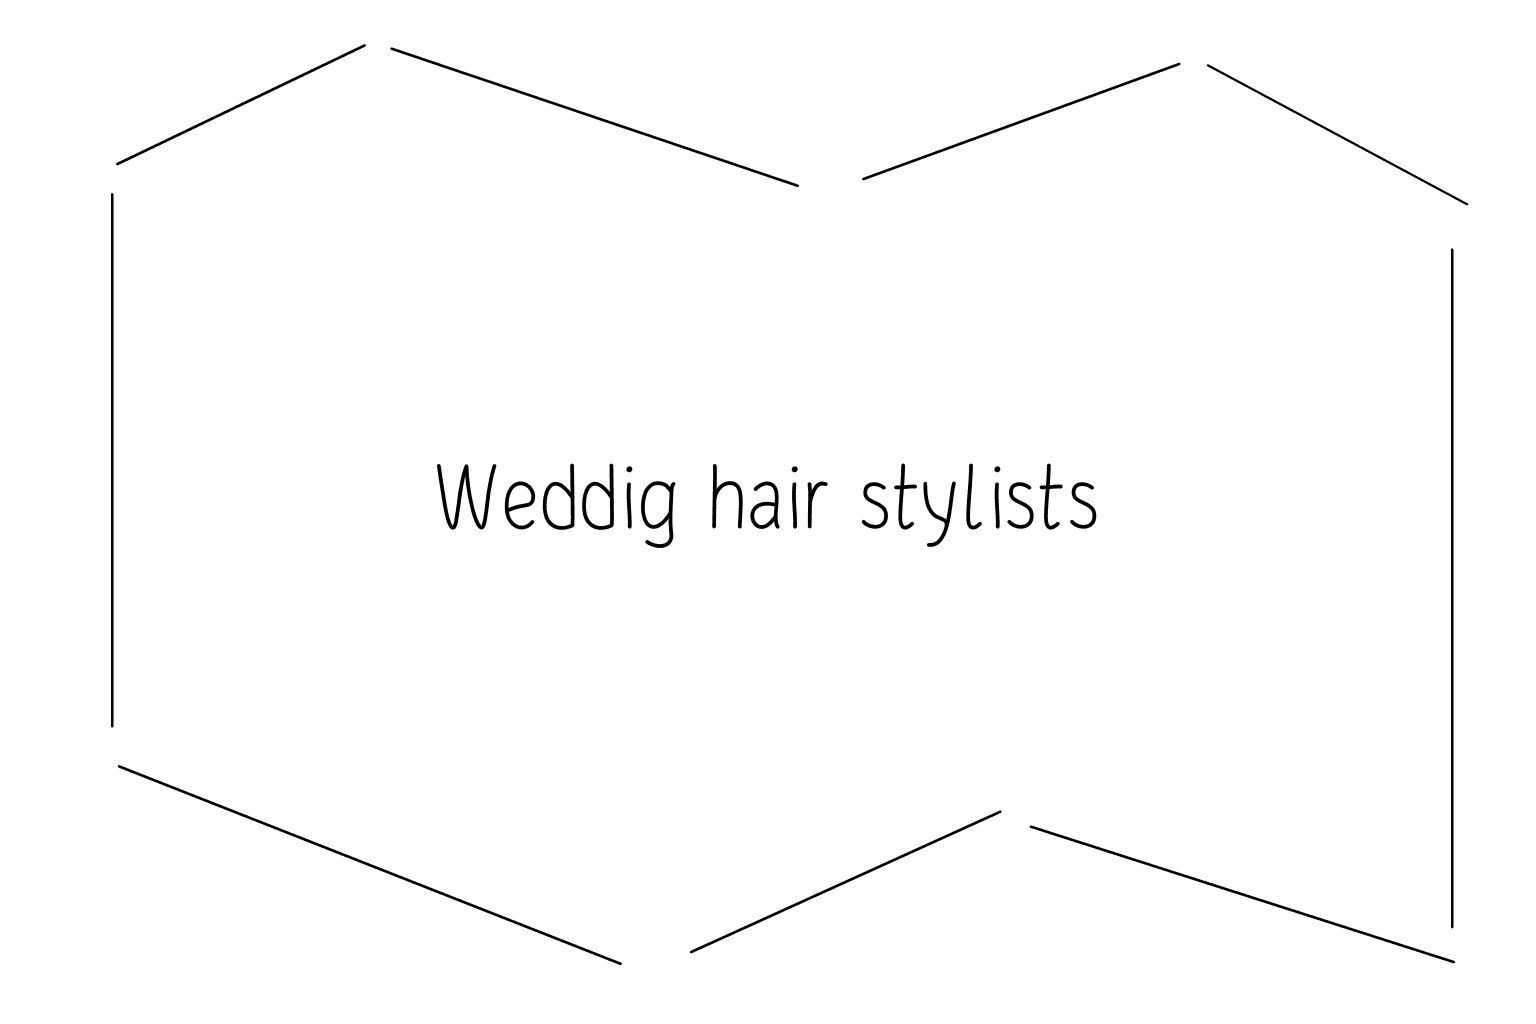 Illustration of Wedding Hair Stylists